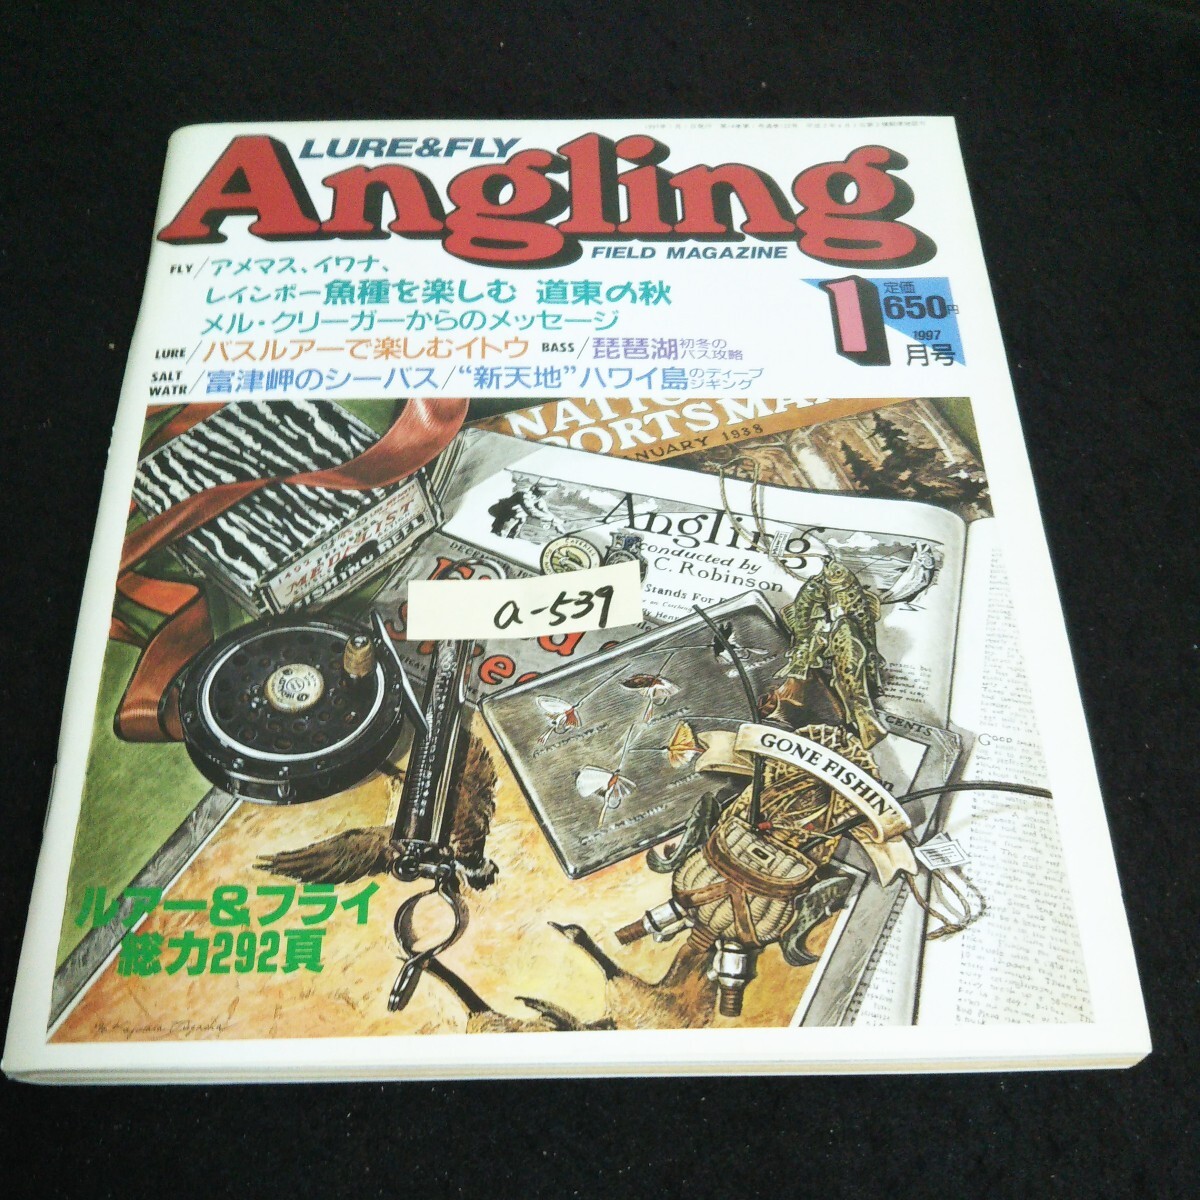 a-539 アングリング 1月号 もっと楽しくルアー&フライ 株式会社廣済堂出版 1997年発行※14_画像1